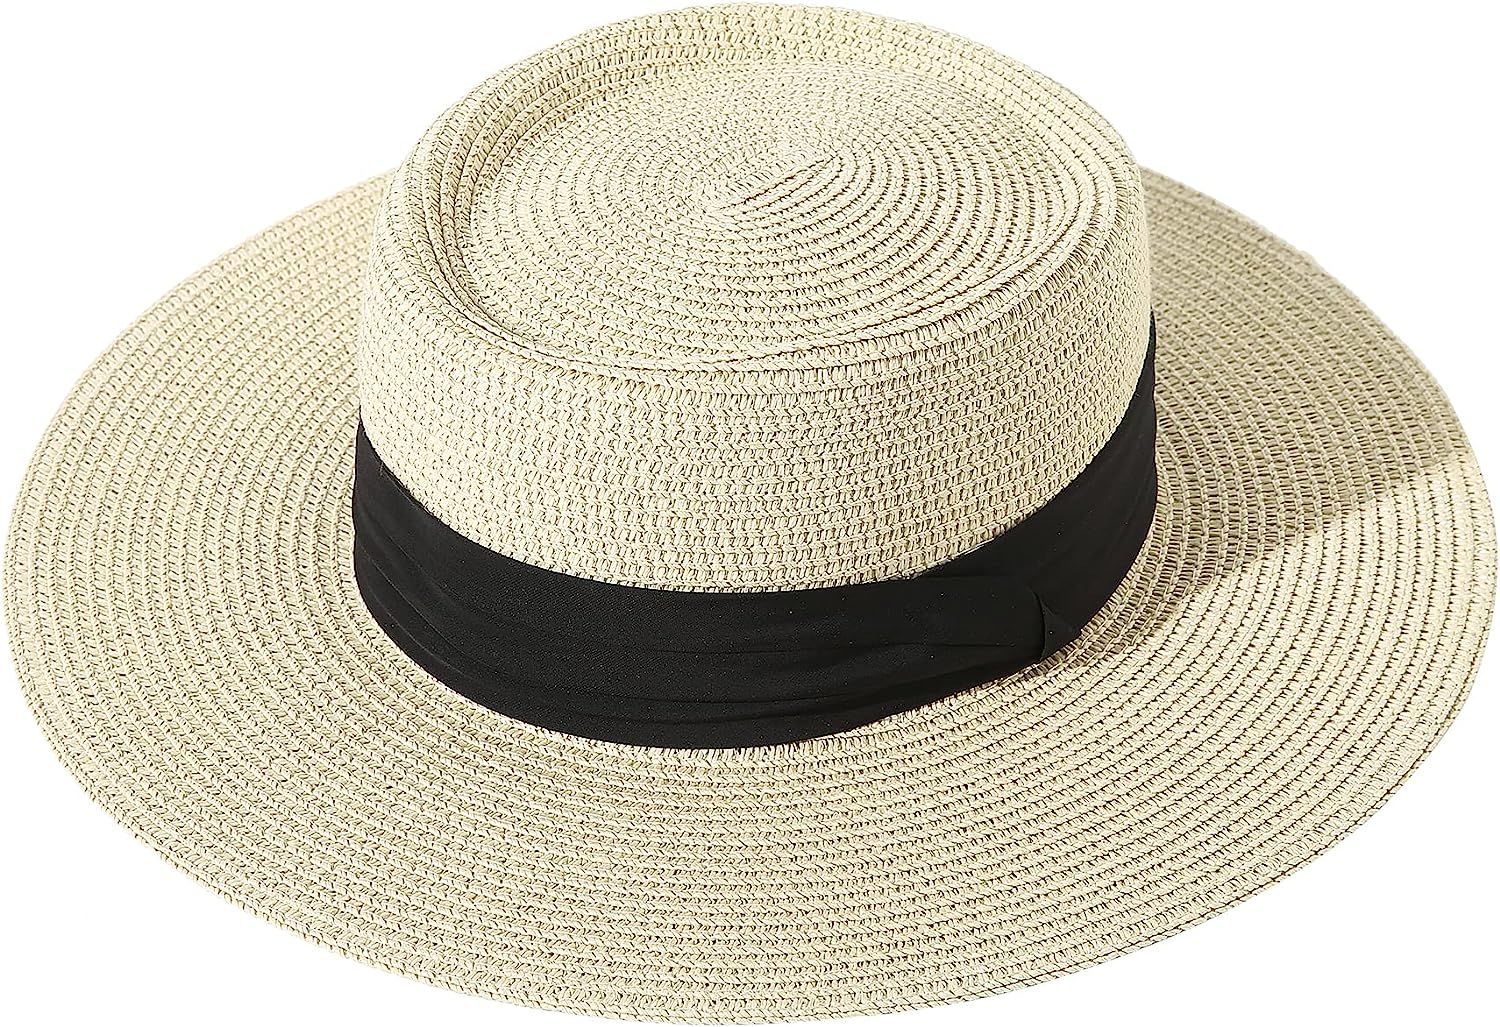 Lanzom UPF50+ Women Wide Brim Straw Panama Sun Hat Boater Summer Beach Sun Hat | Amazon (US)